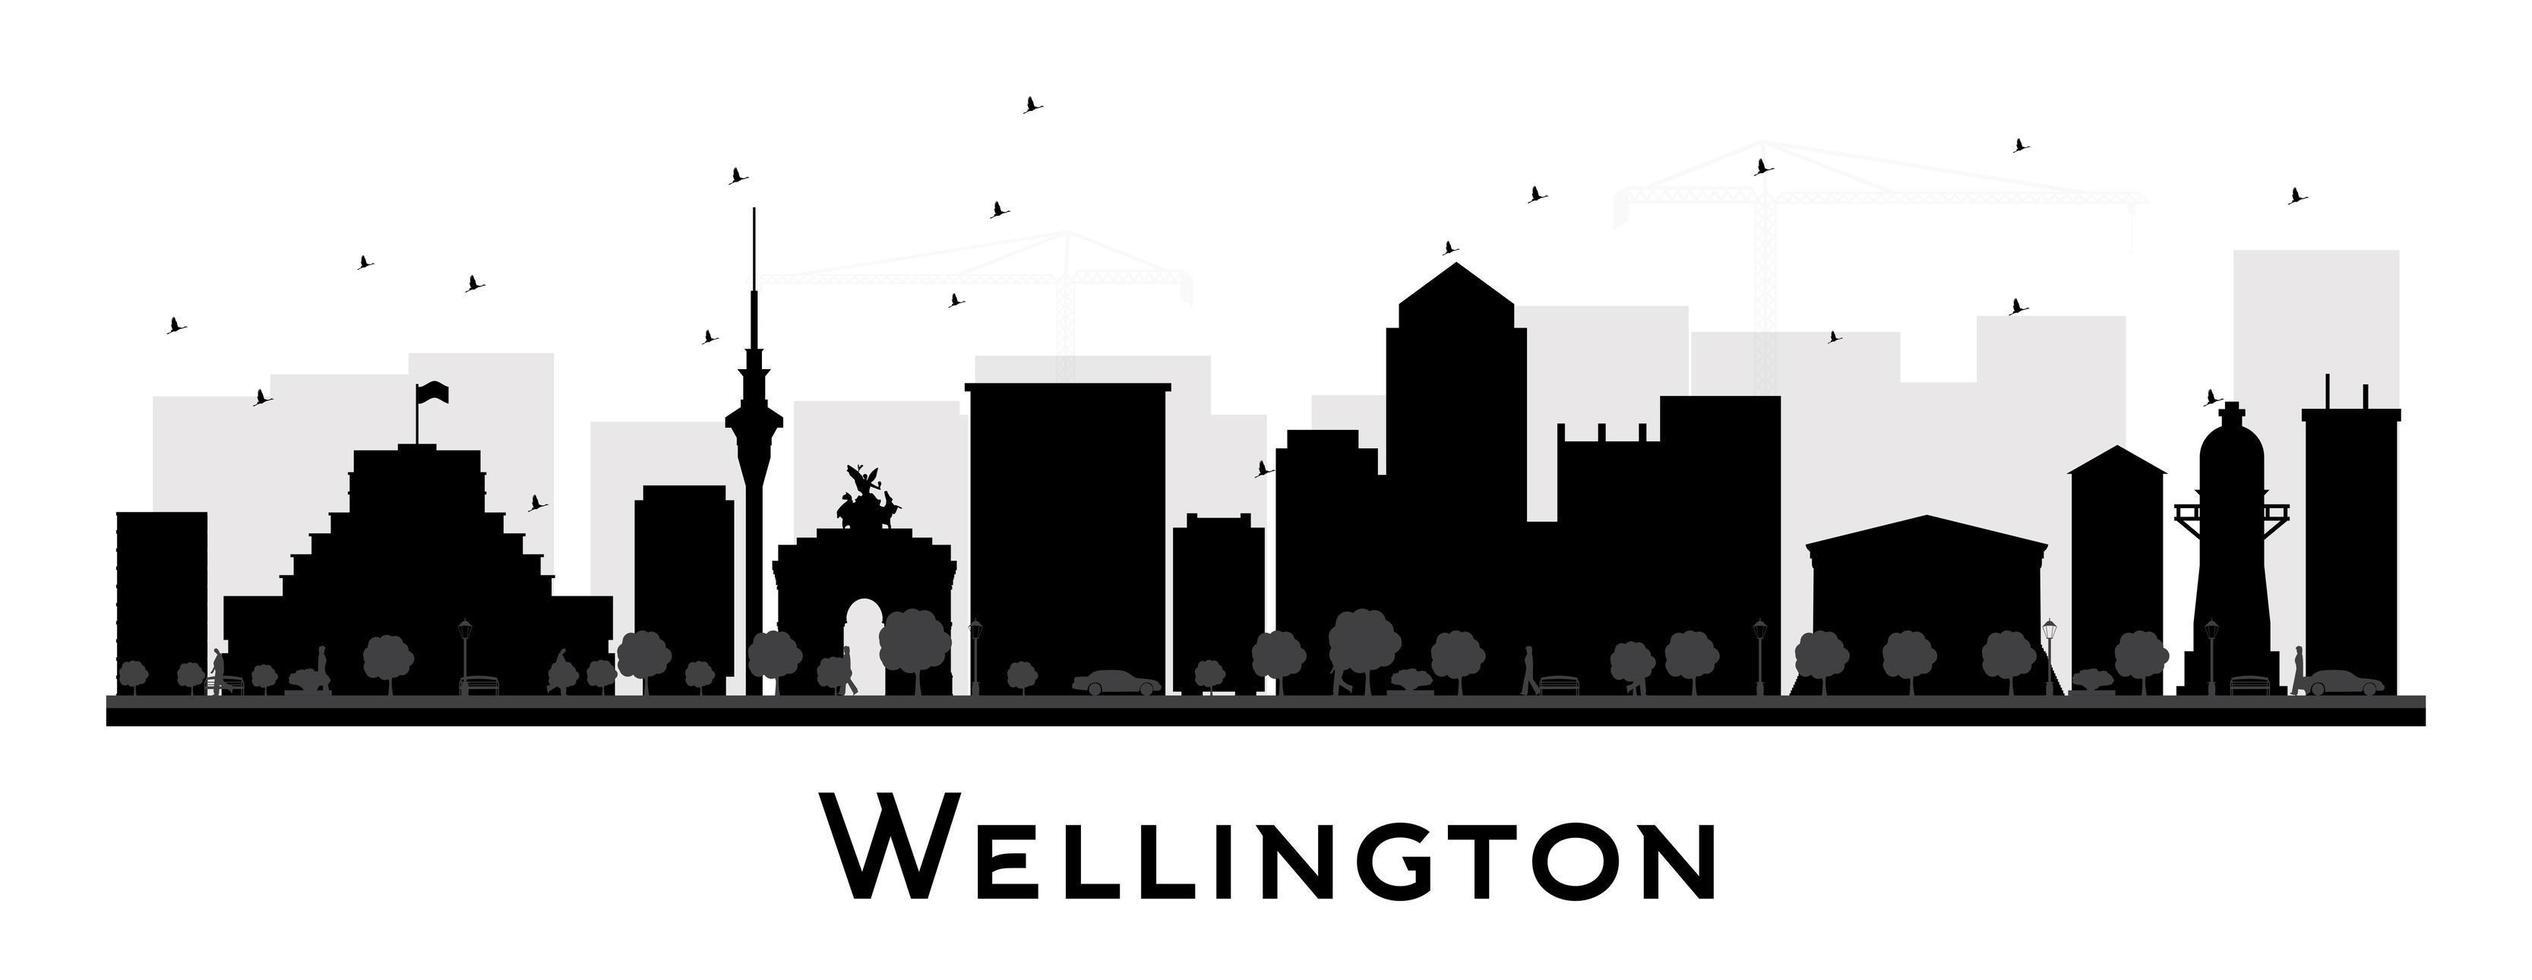 Wellington City skyline black and white silhouette. vector